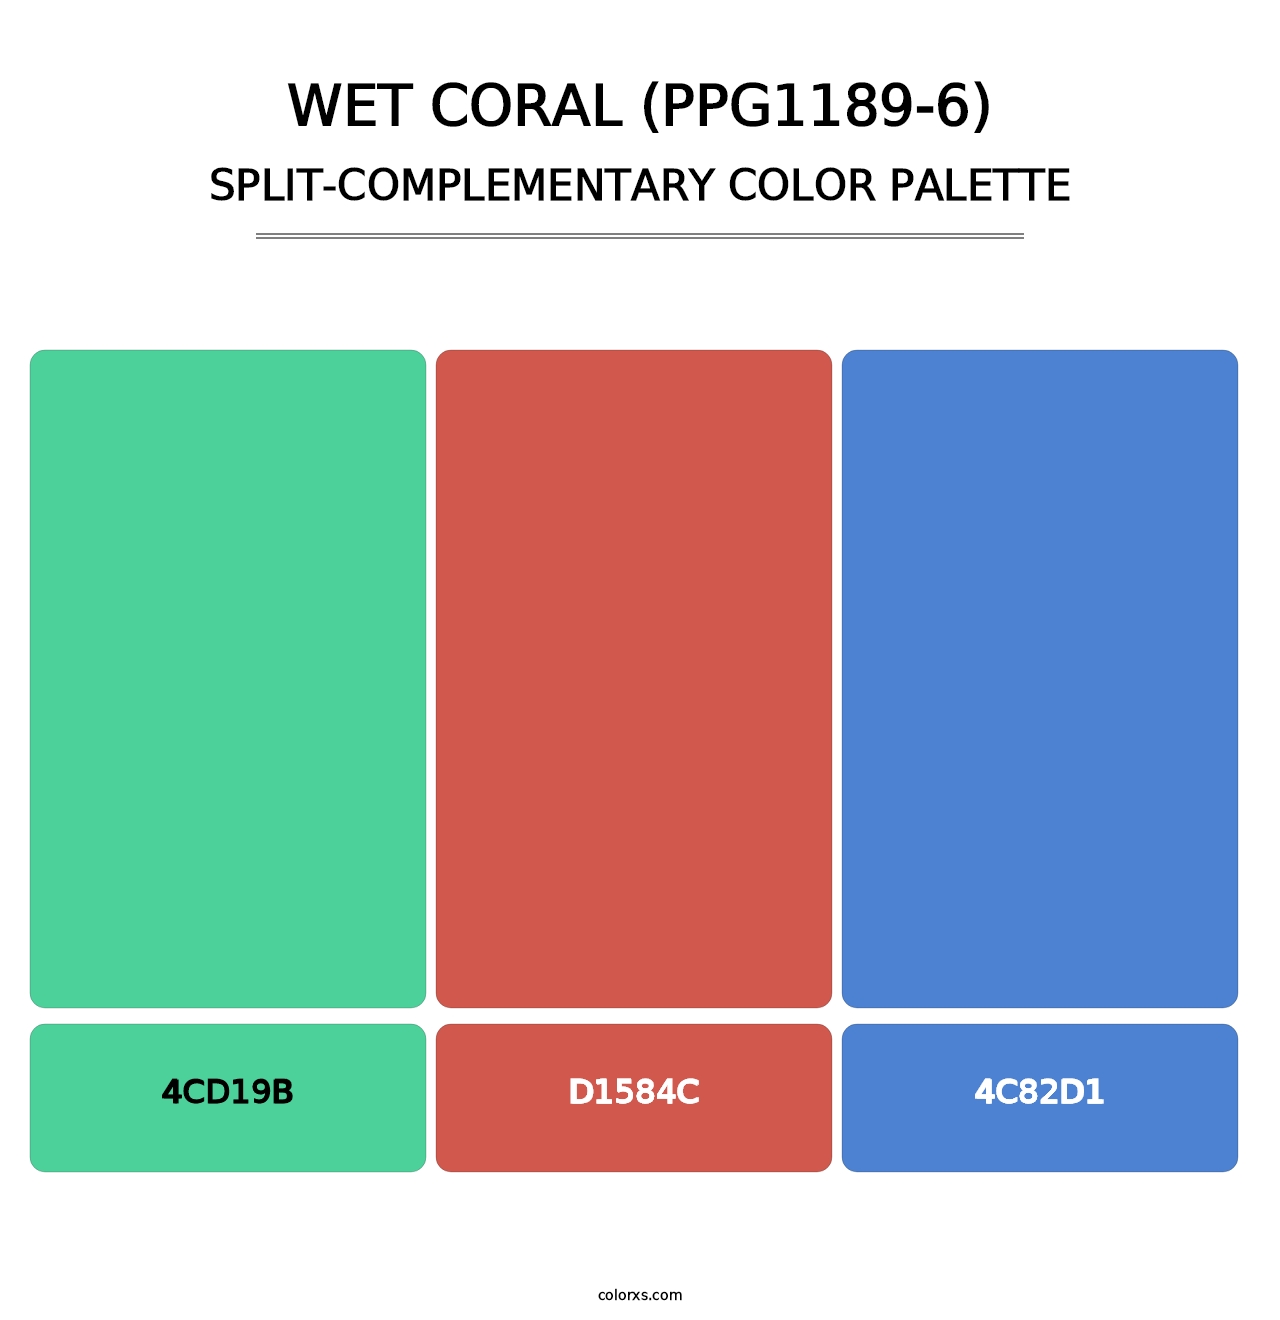 Wet Coral (PPG1189-6) - Split-Complementary Color Palette